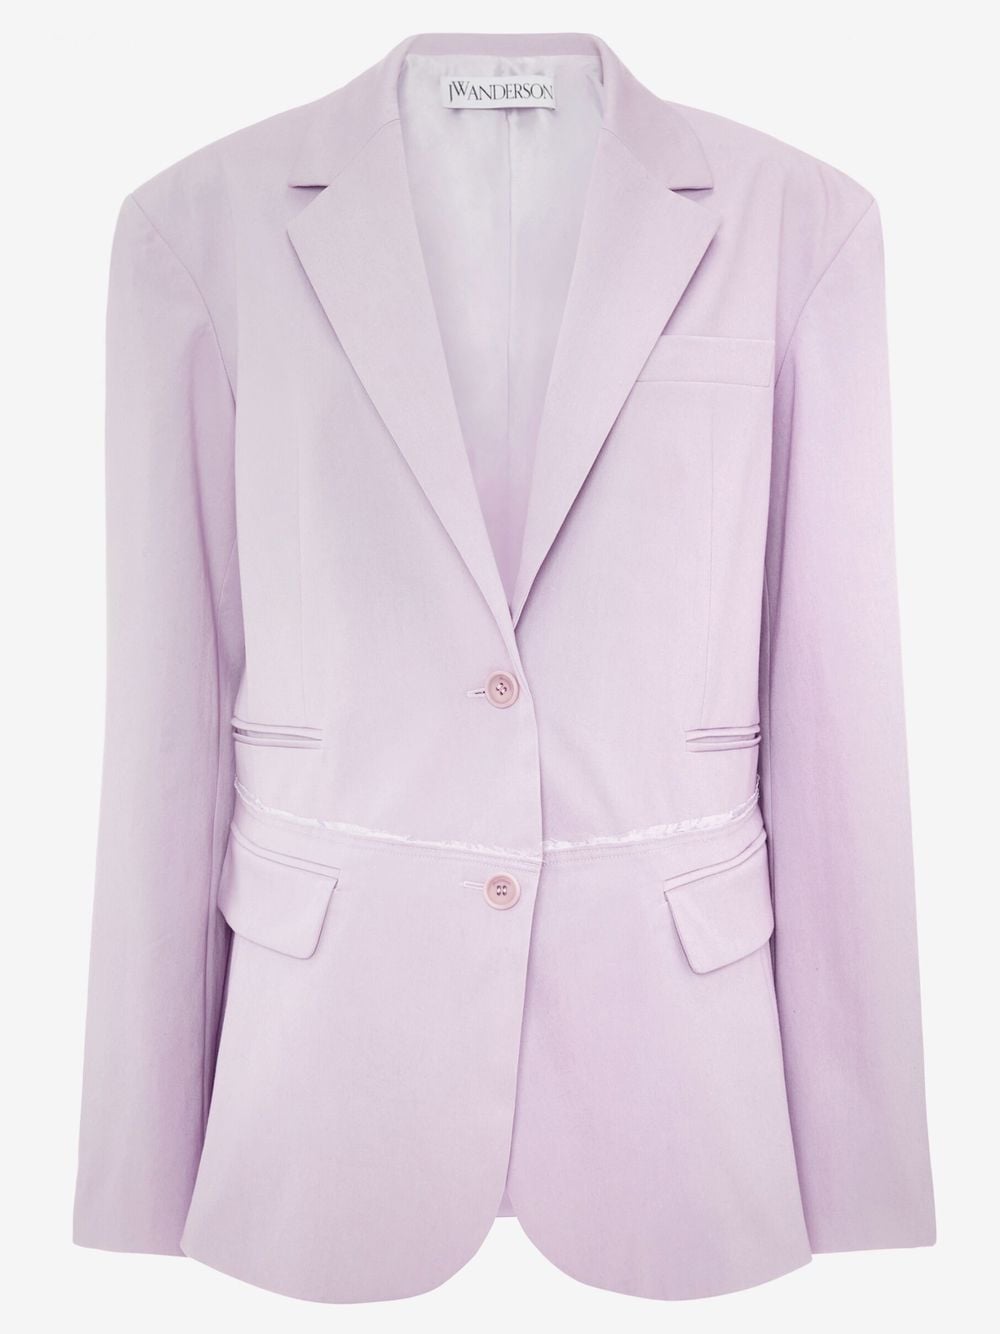 JW Anderson Deconstructed blazer jacket - Pink